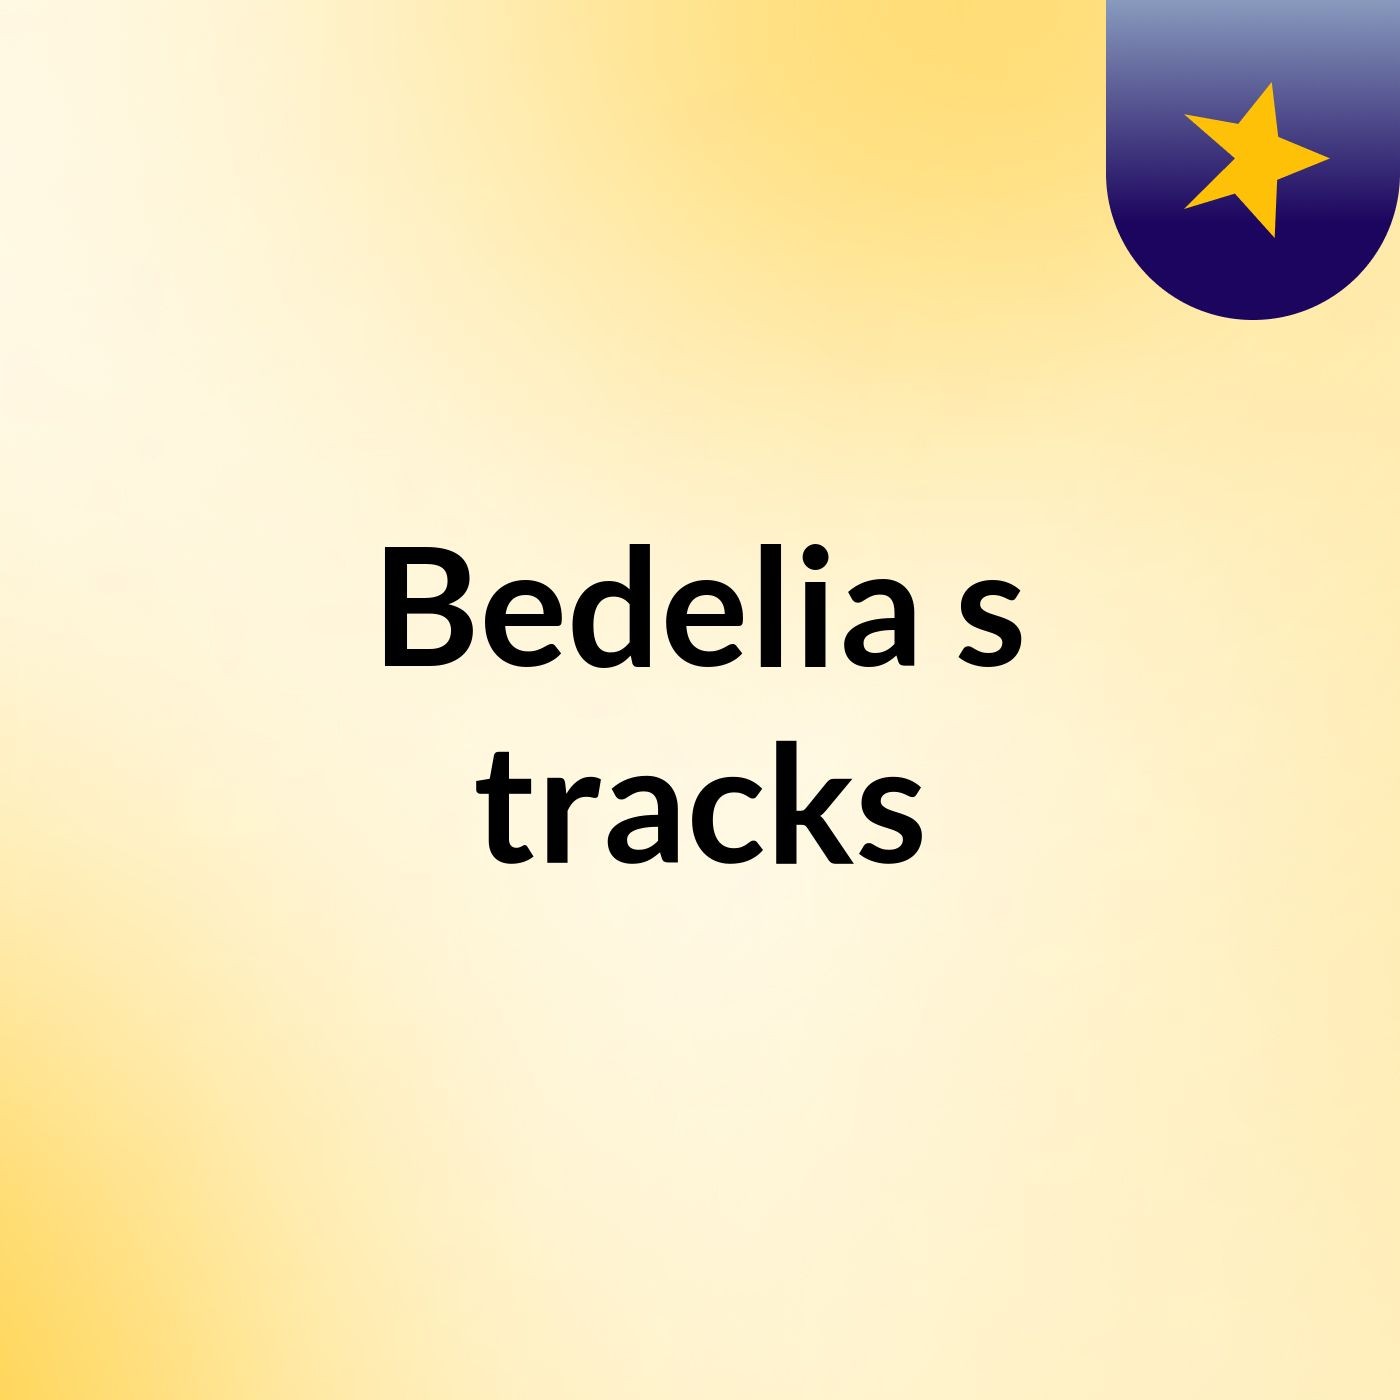 Bedelia's tracks